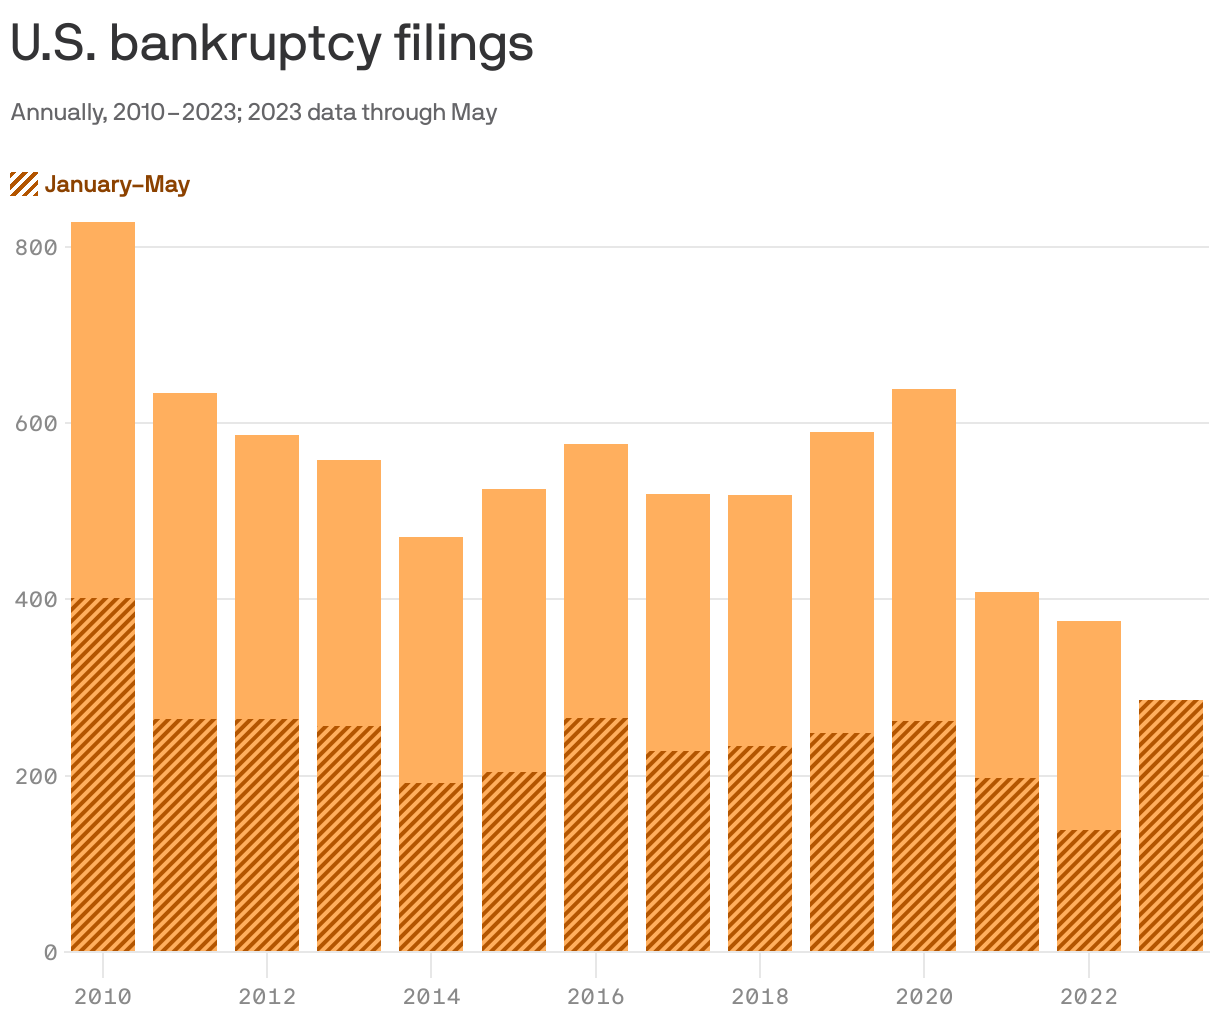 U.S. bankruptcy filings